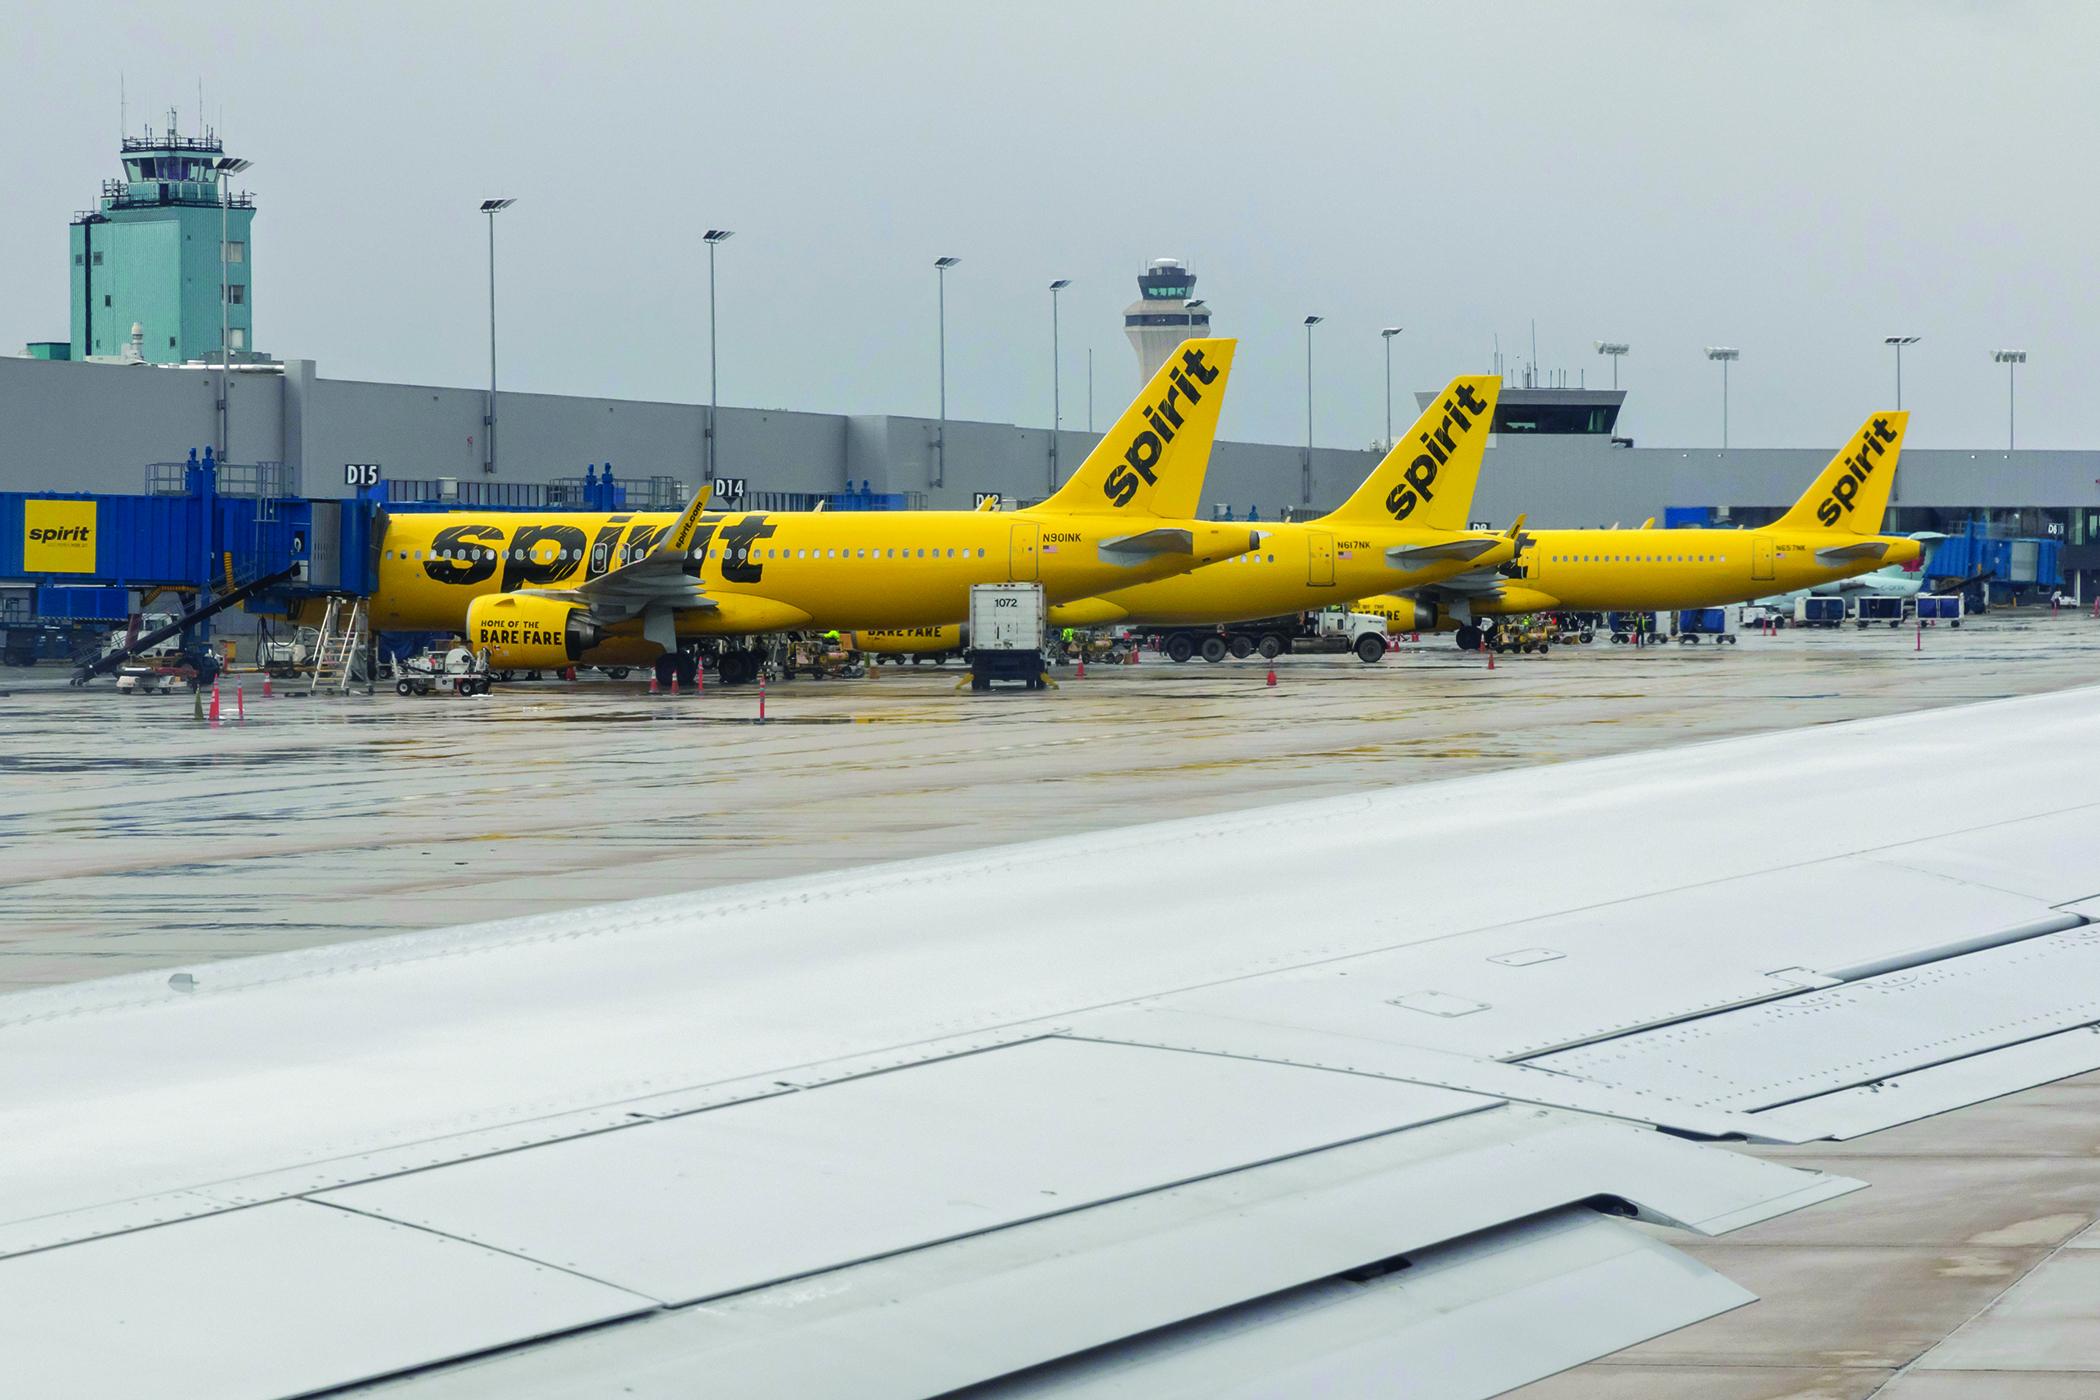 Spirit aircraft parked at airport